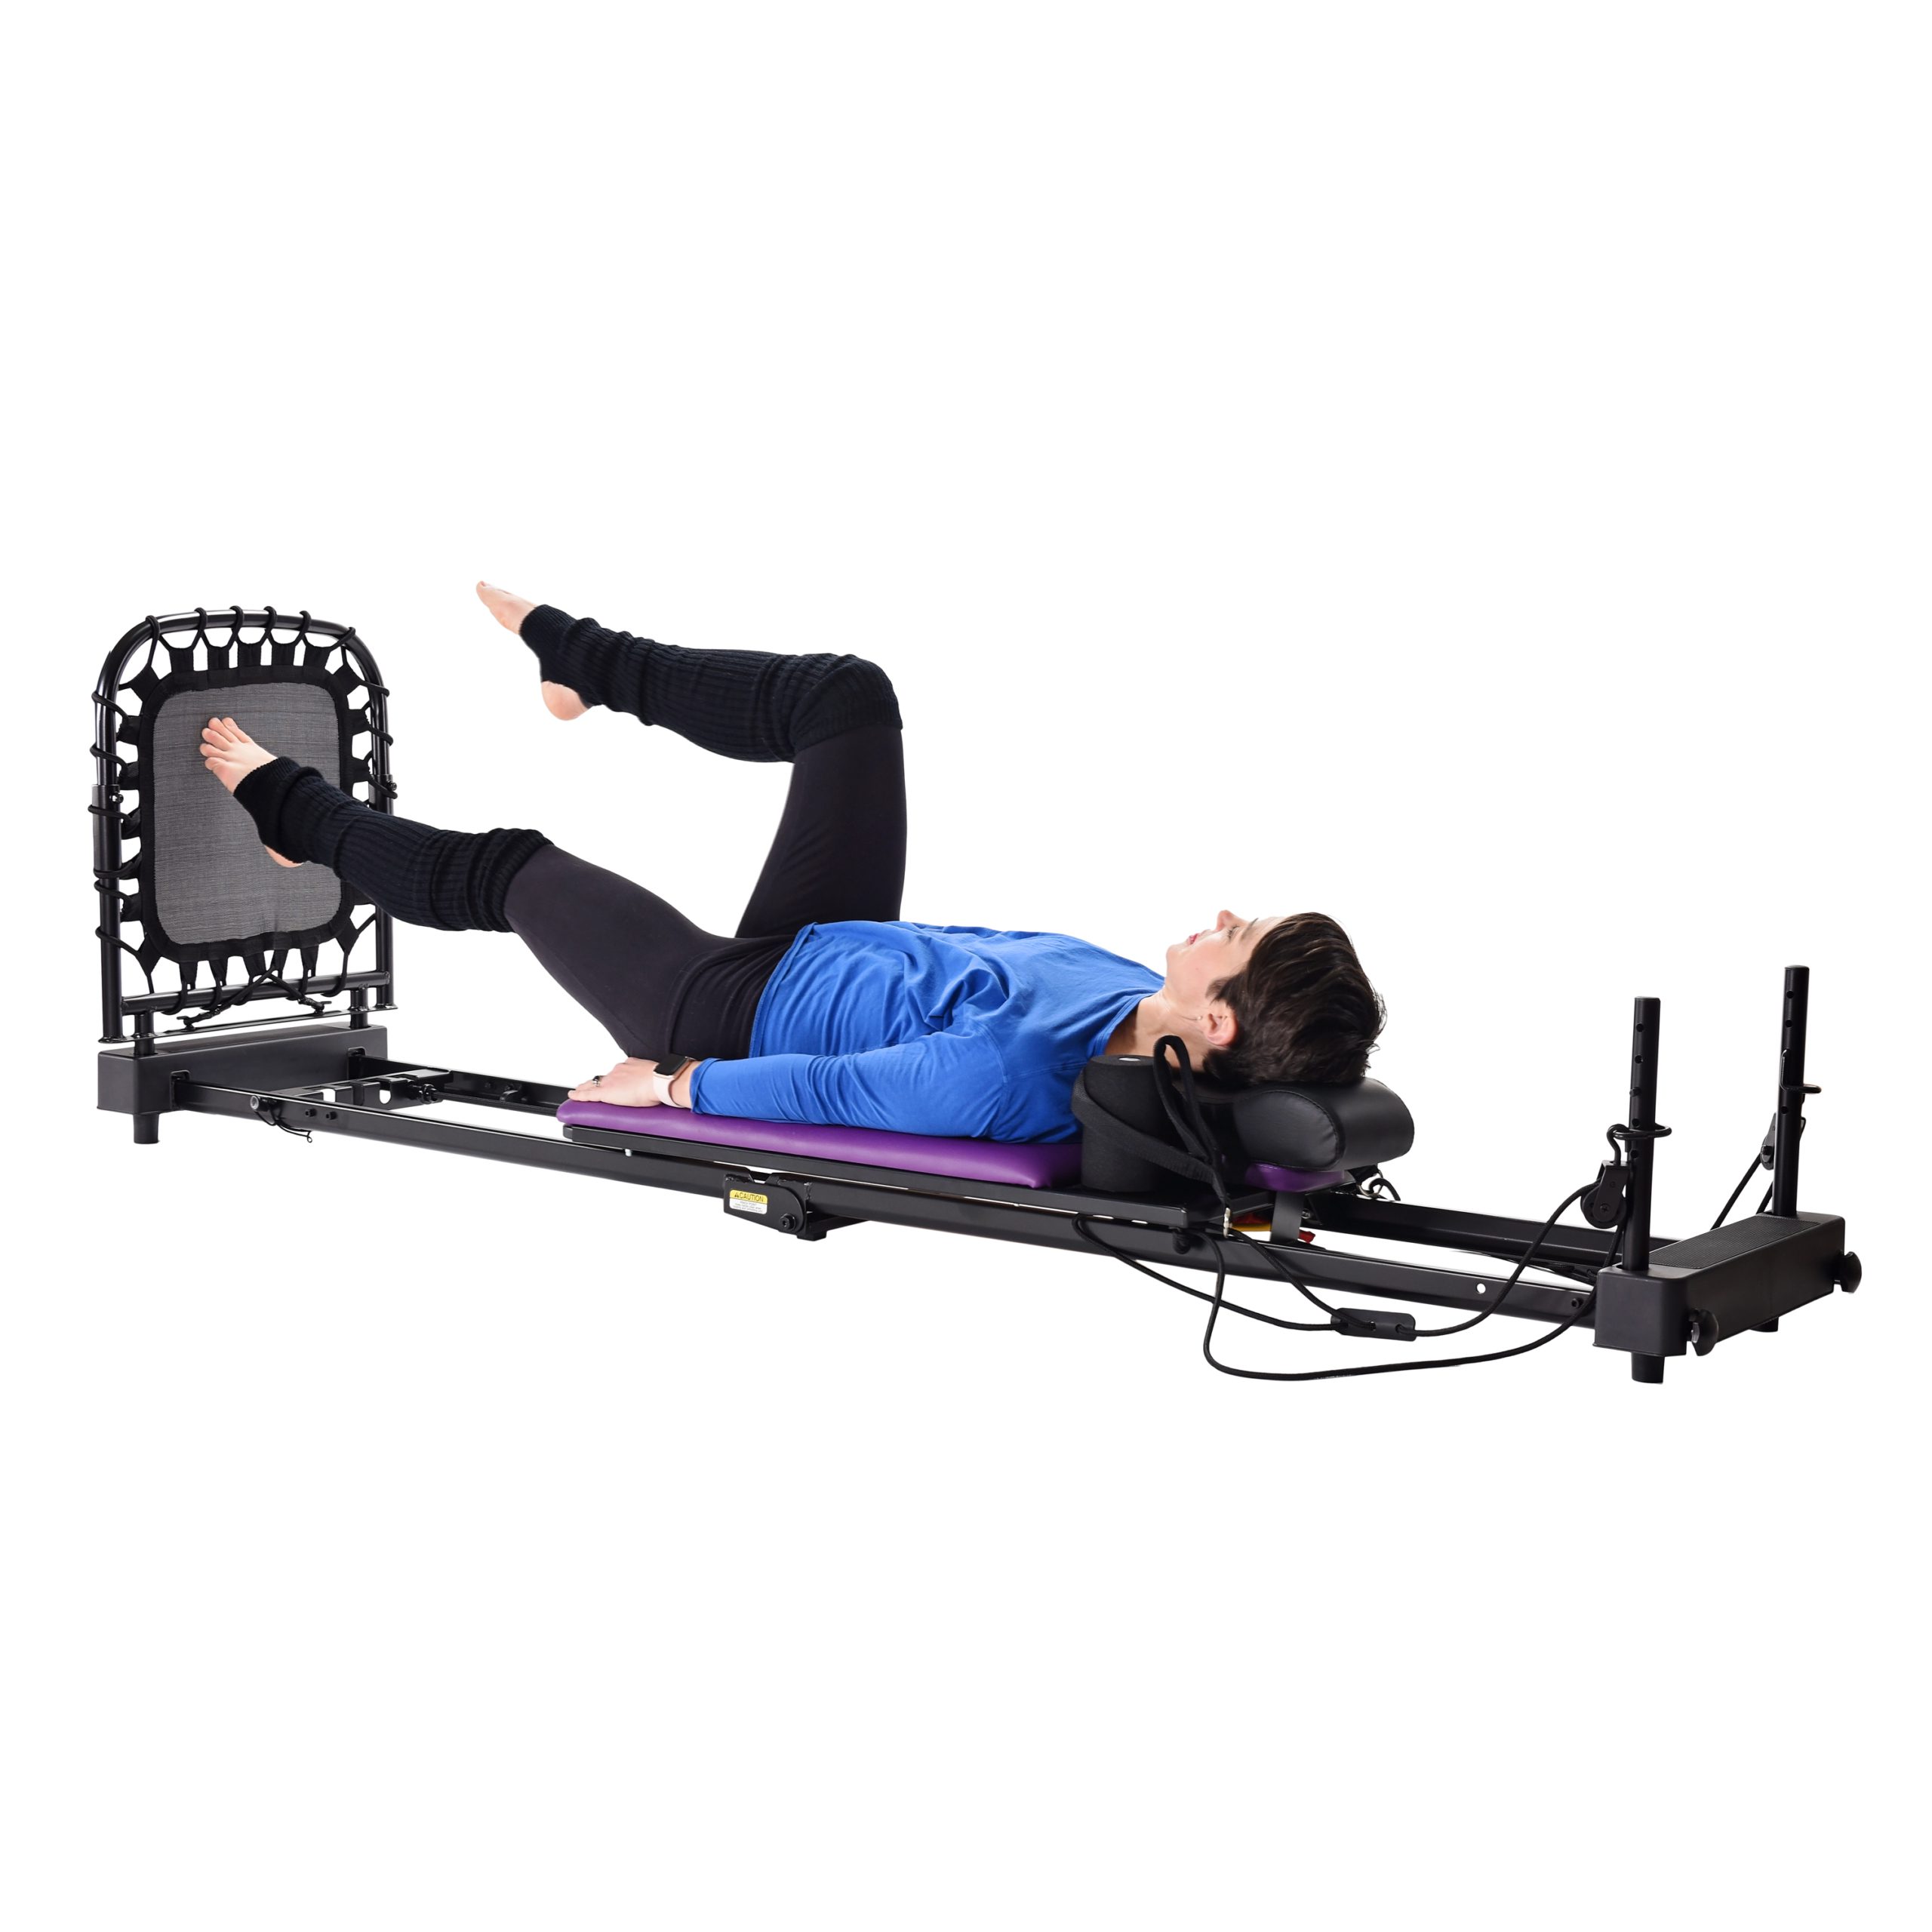 Buy Portable Pilates Studio Fitness Exercise Equipment (Purple) Online